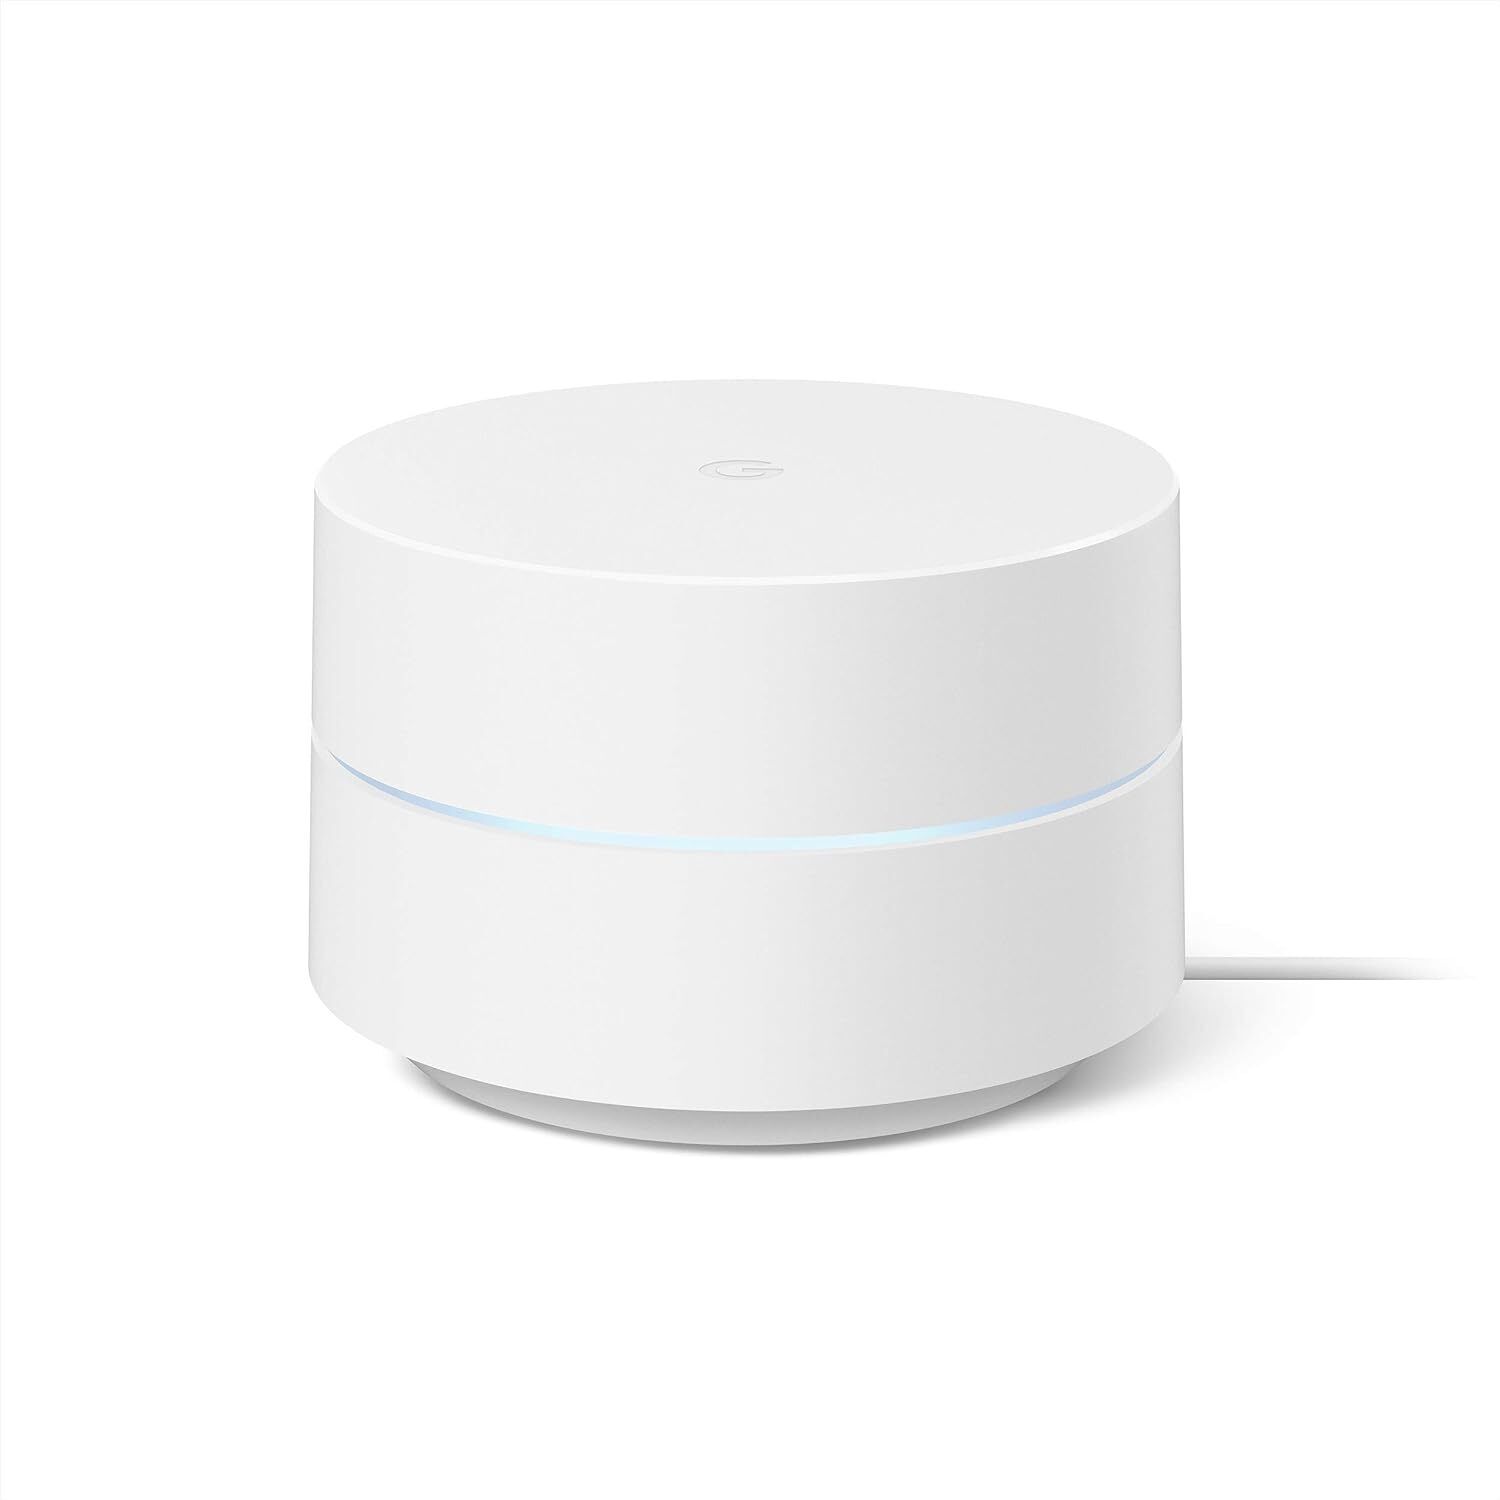 Google GA02430-US White Mesh WiFi System/Wifi Router 1500 Sq Ft (Open box)